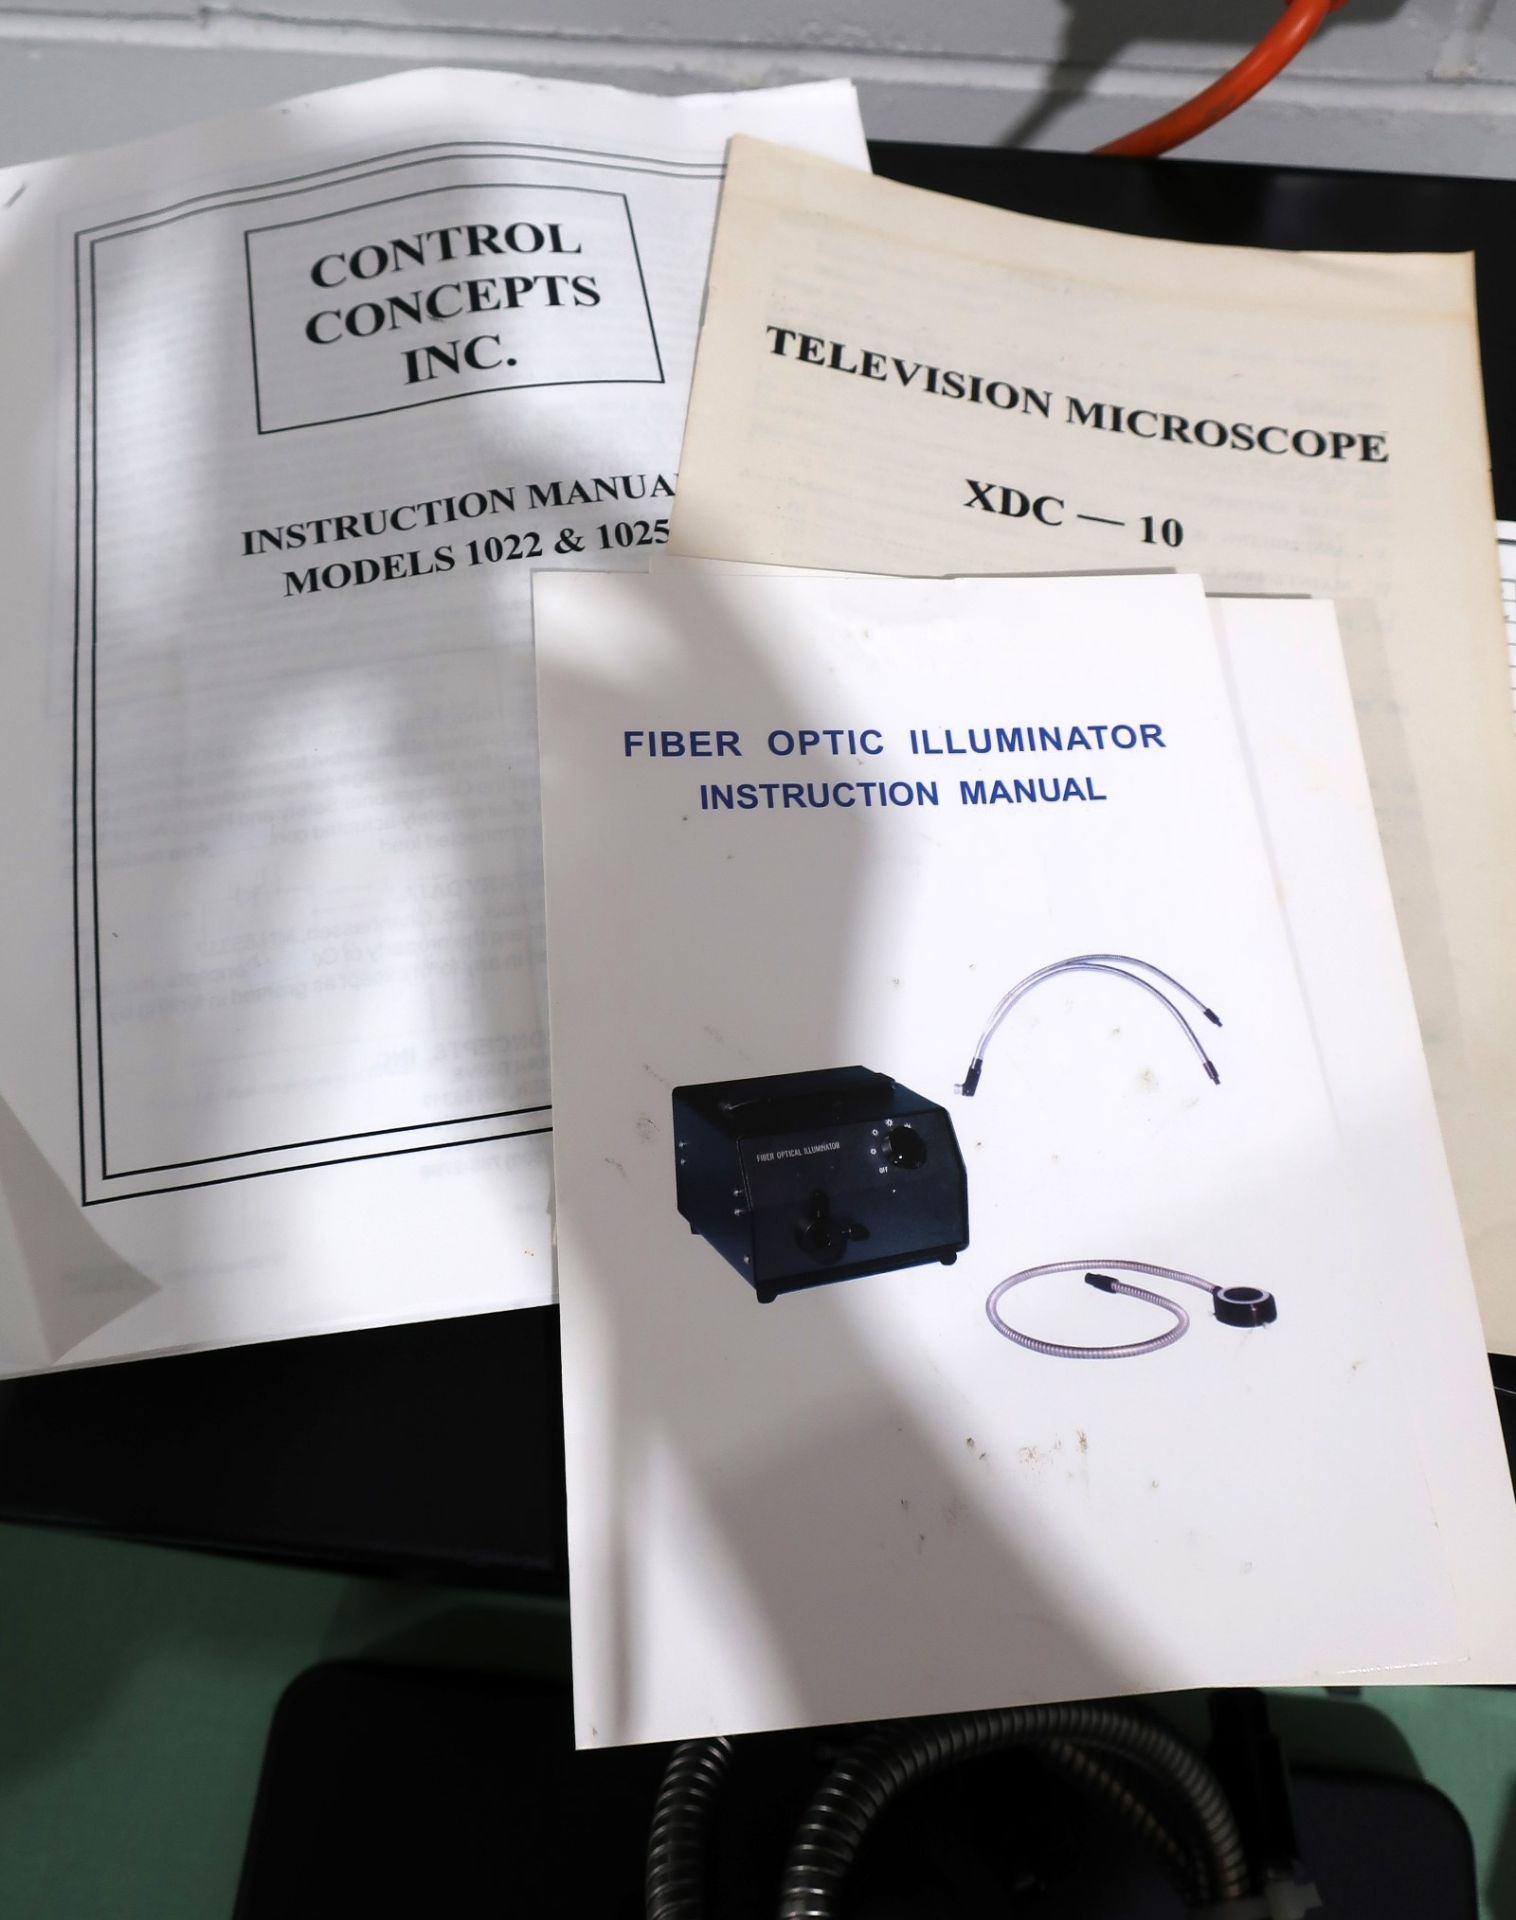 Control Concepts Inc Fiber Optic illuminator with Television Microscope XDC-10 - Image 7 of 9